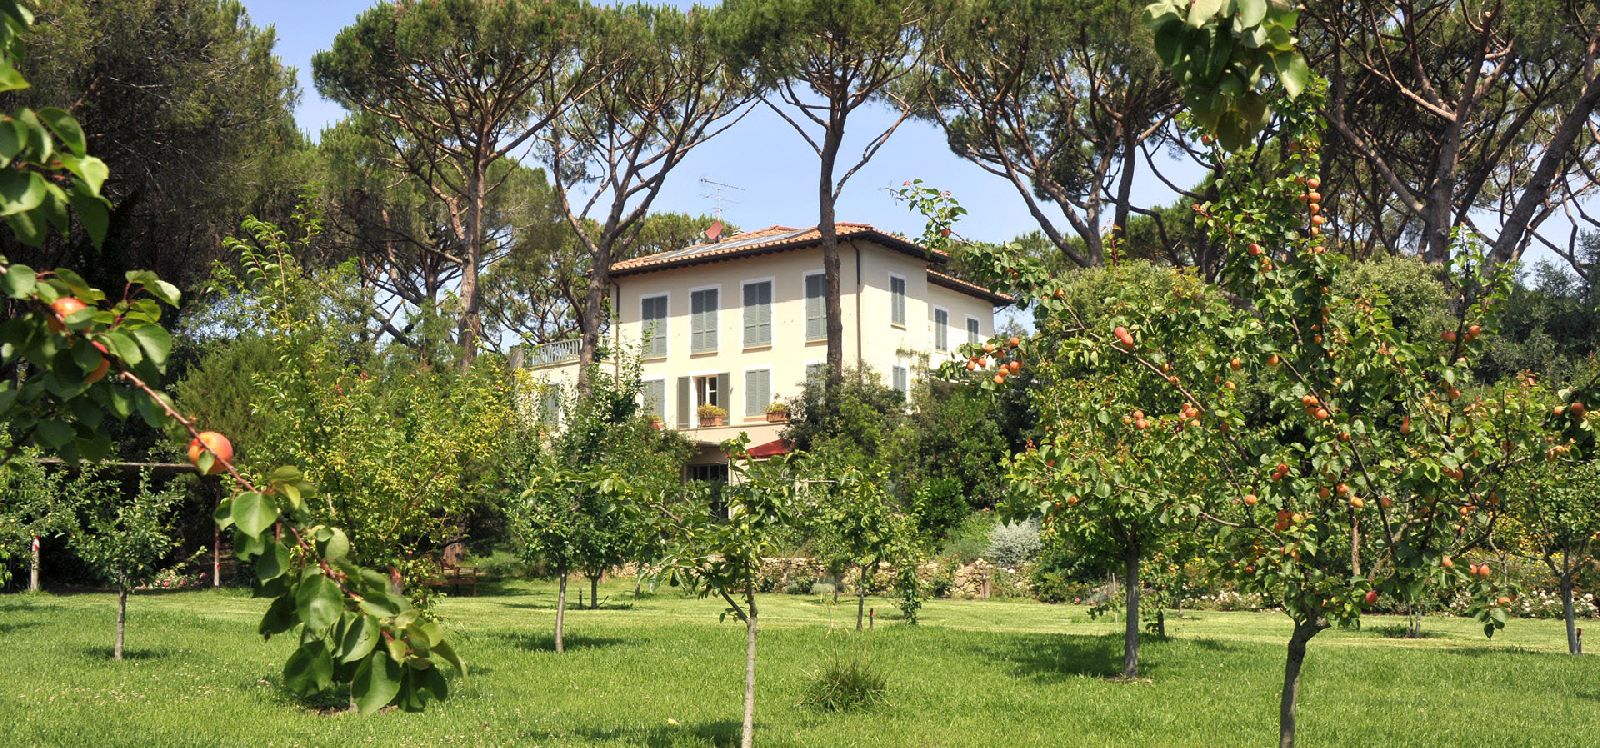 The gardens at villa Tombolino in Tuscany